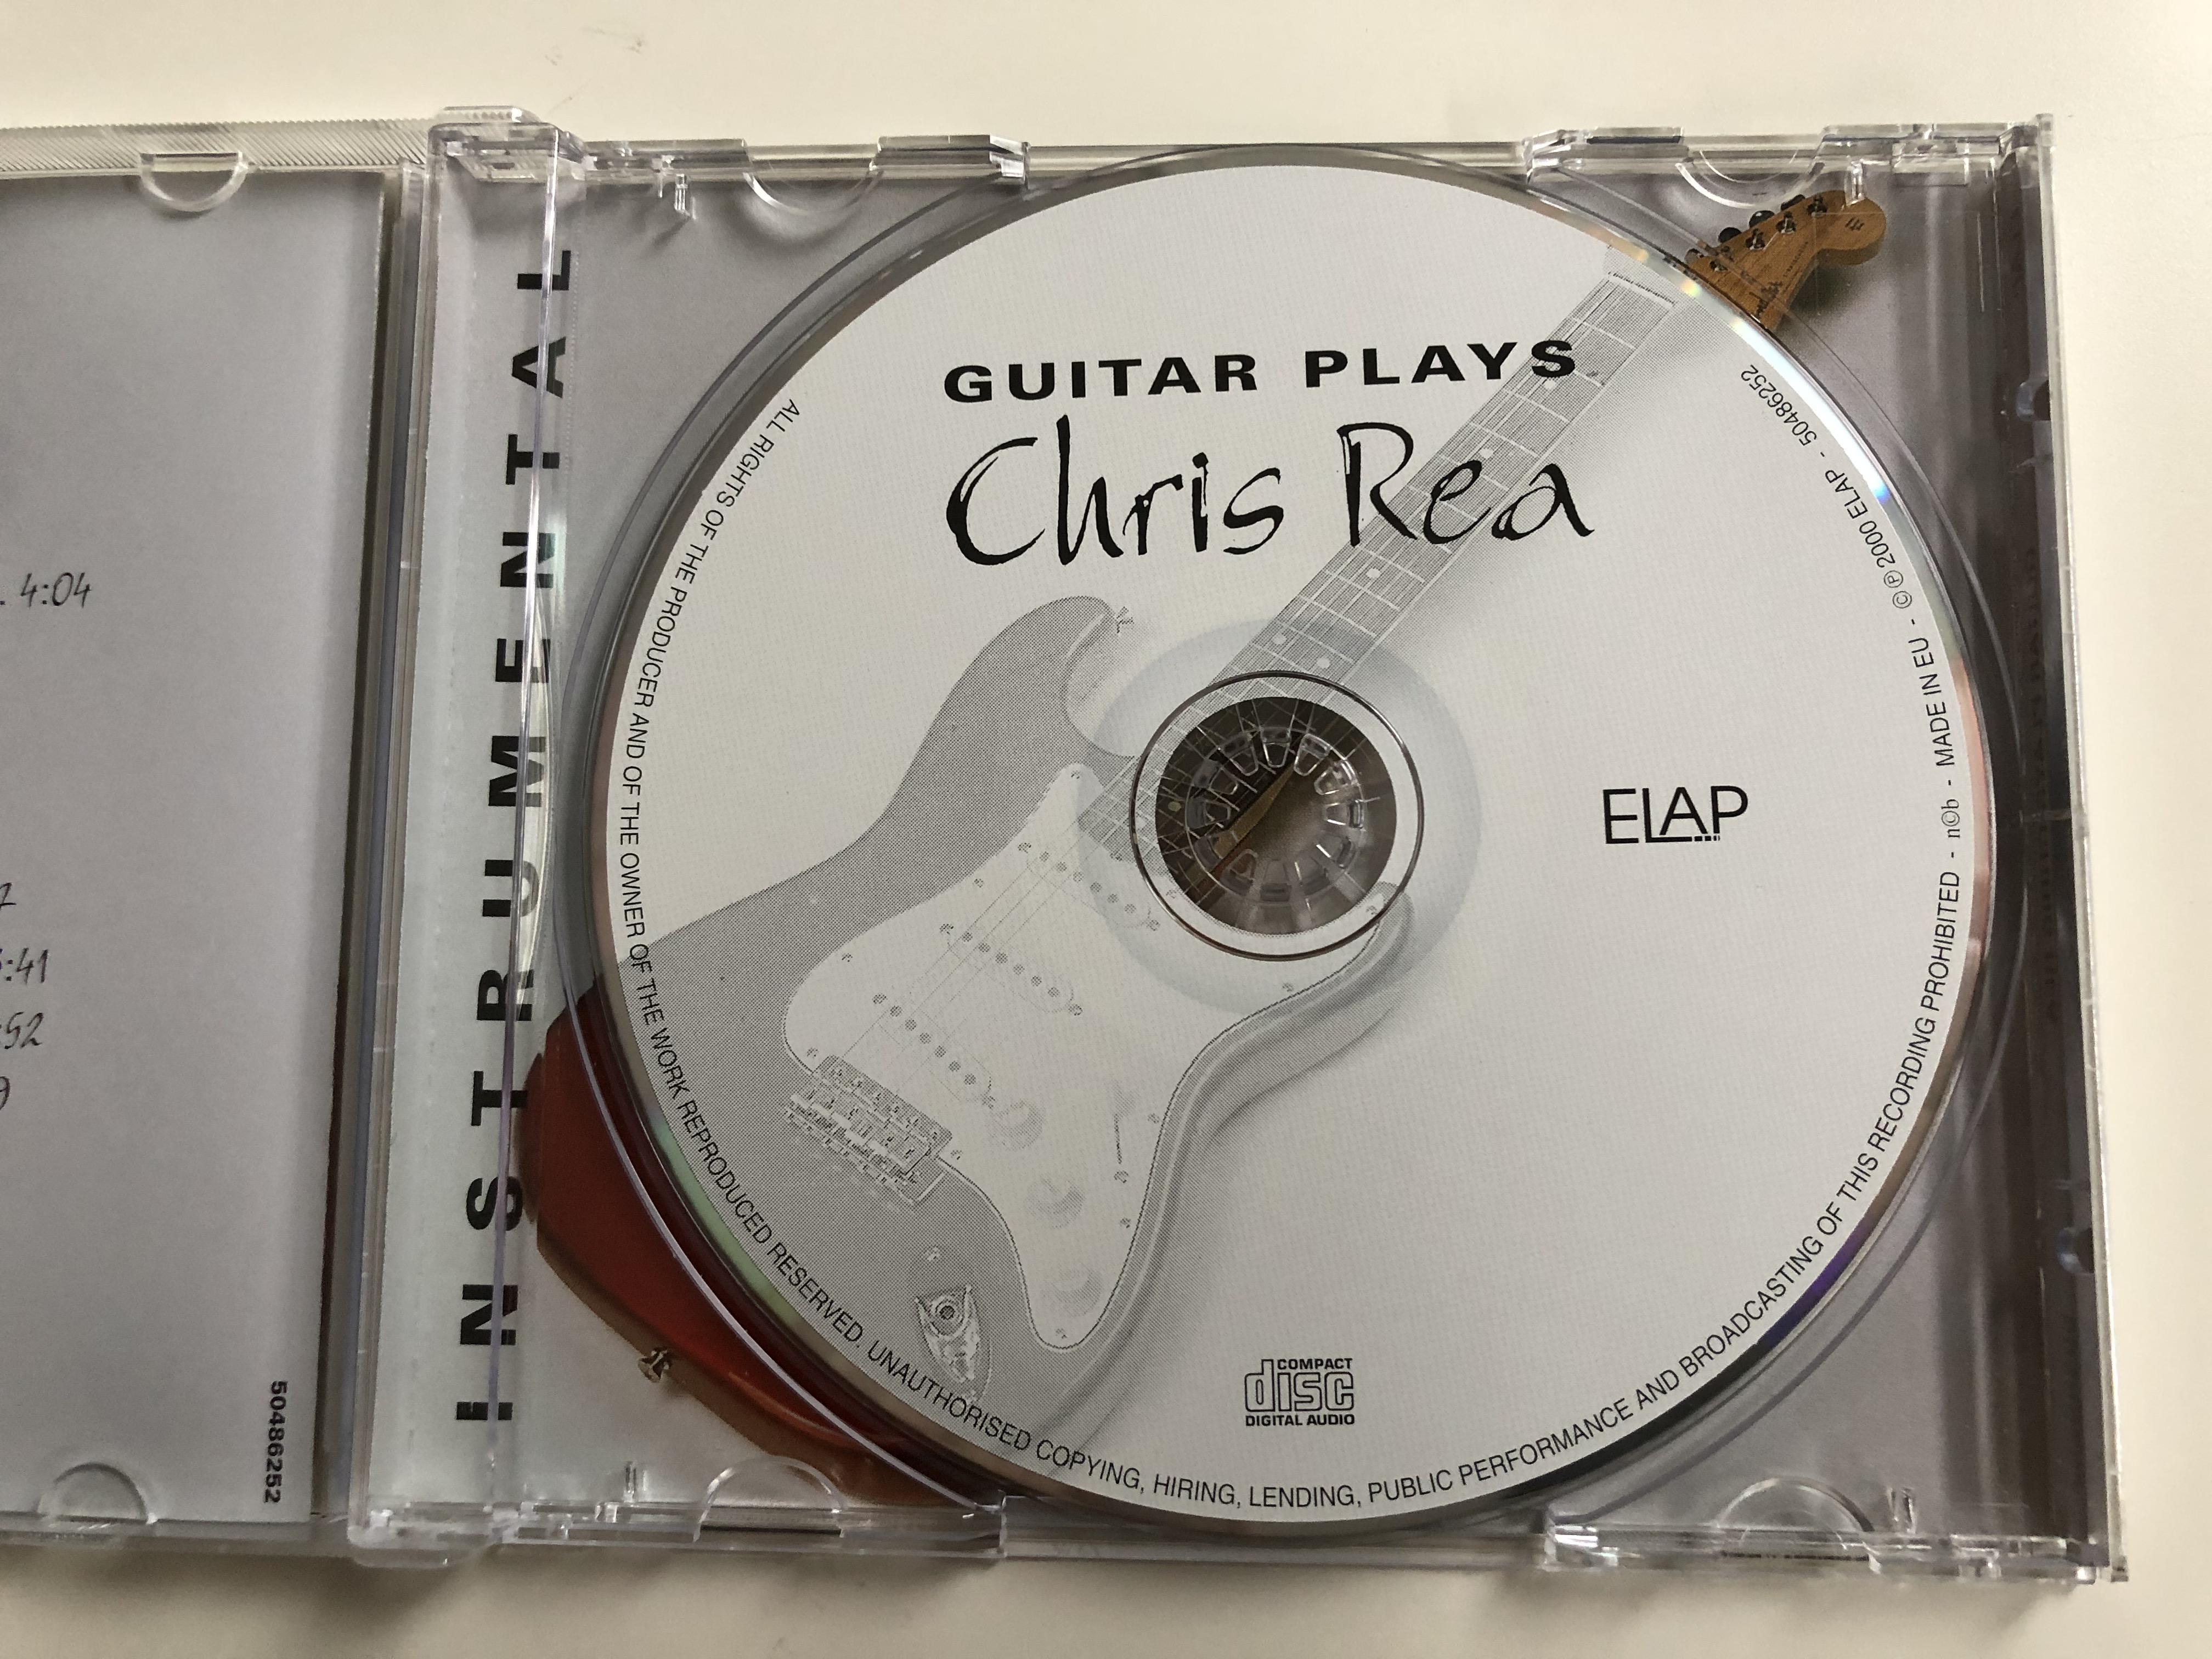 guitar-plays-chris-rea-performed-by-joe-carran-elap-audio-cd-2000-5706238313053-4-.jpg